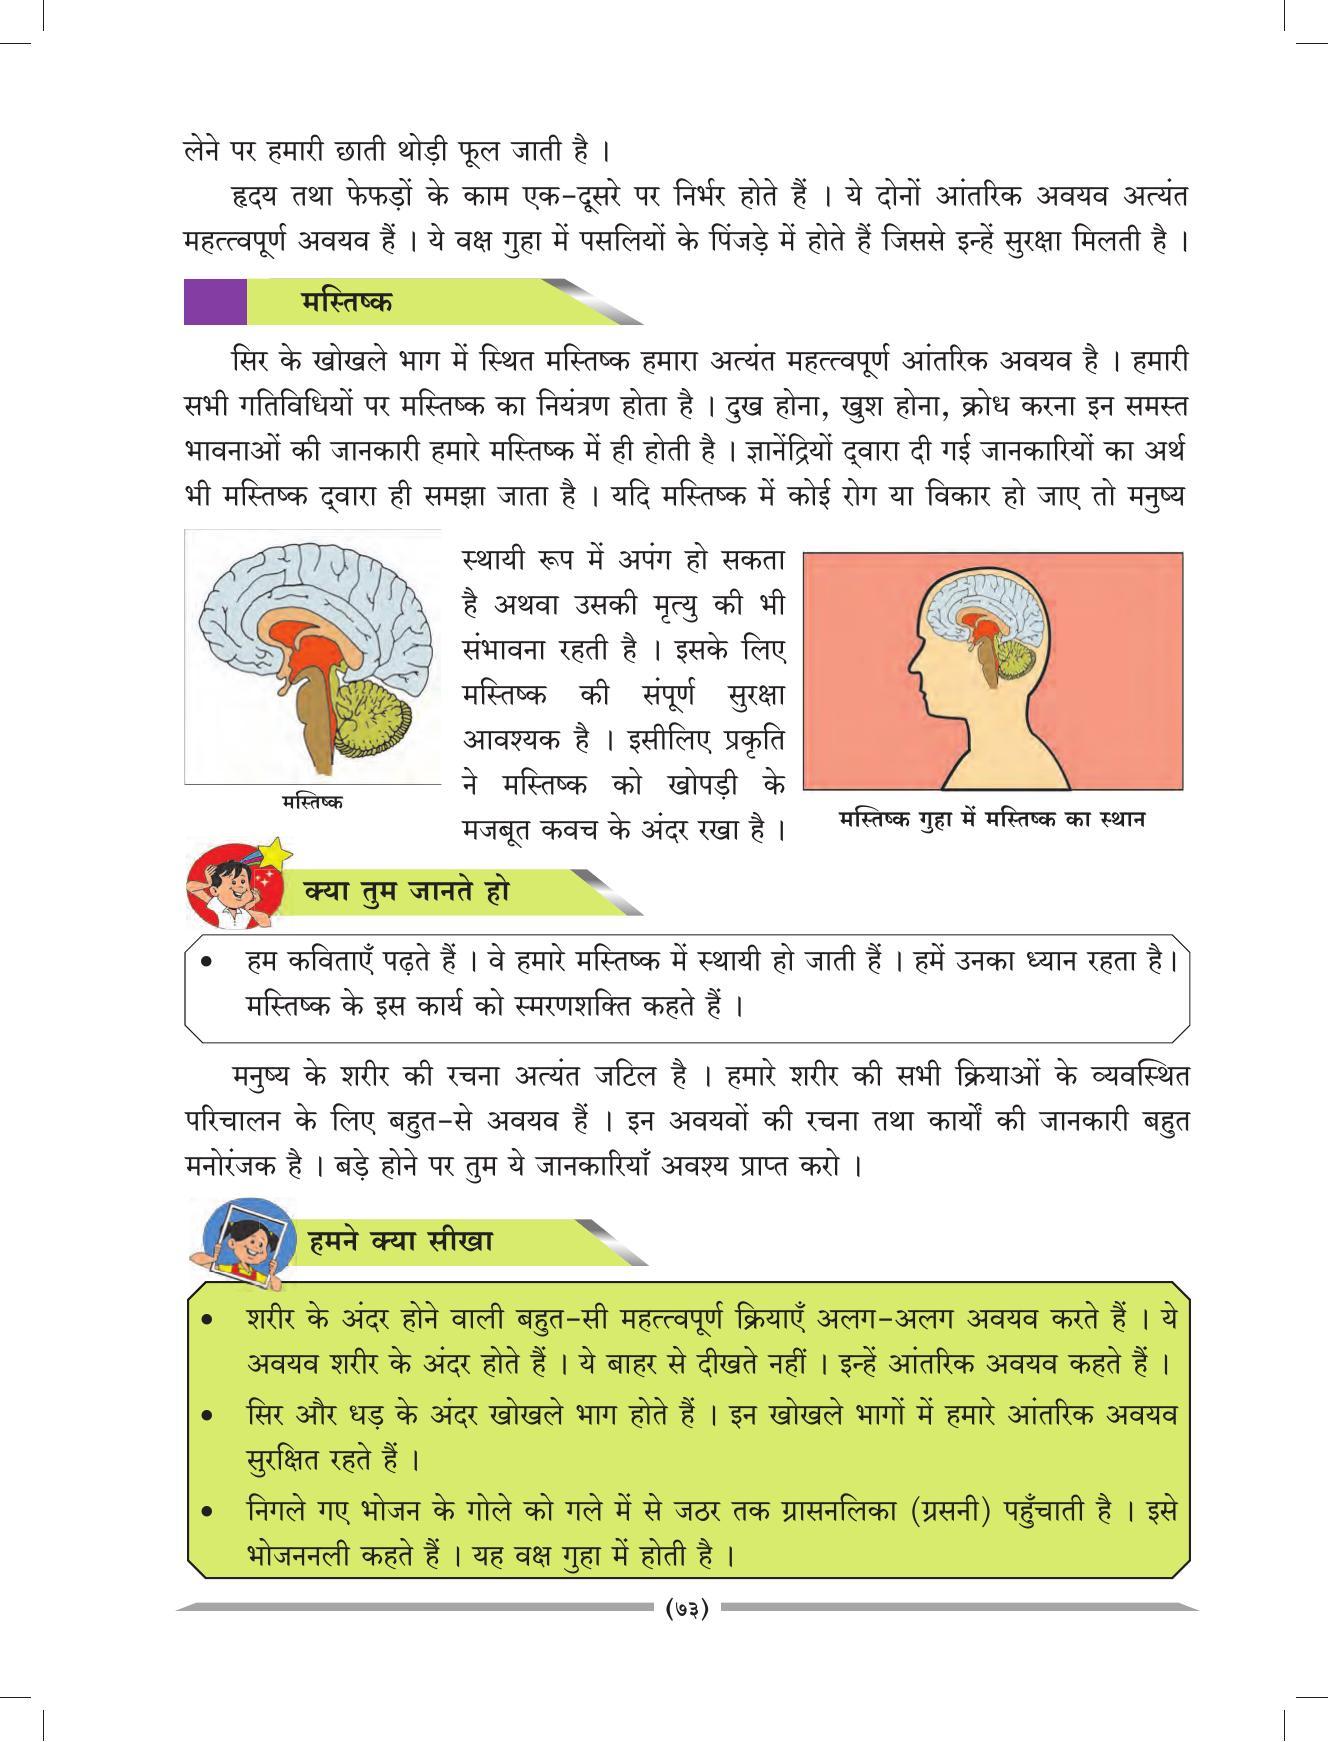 Maharashtra Board Class 4 EVS 1 (Hindi Medium) Textbook - Page 83